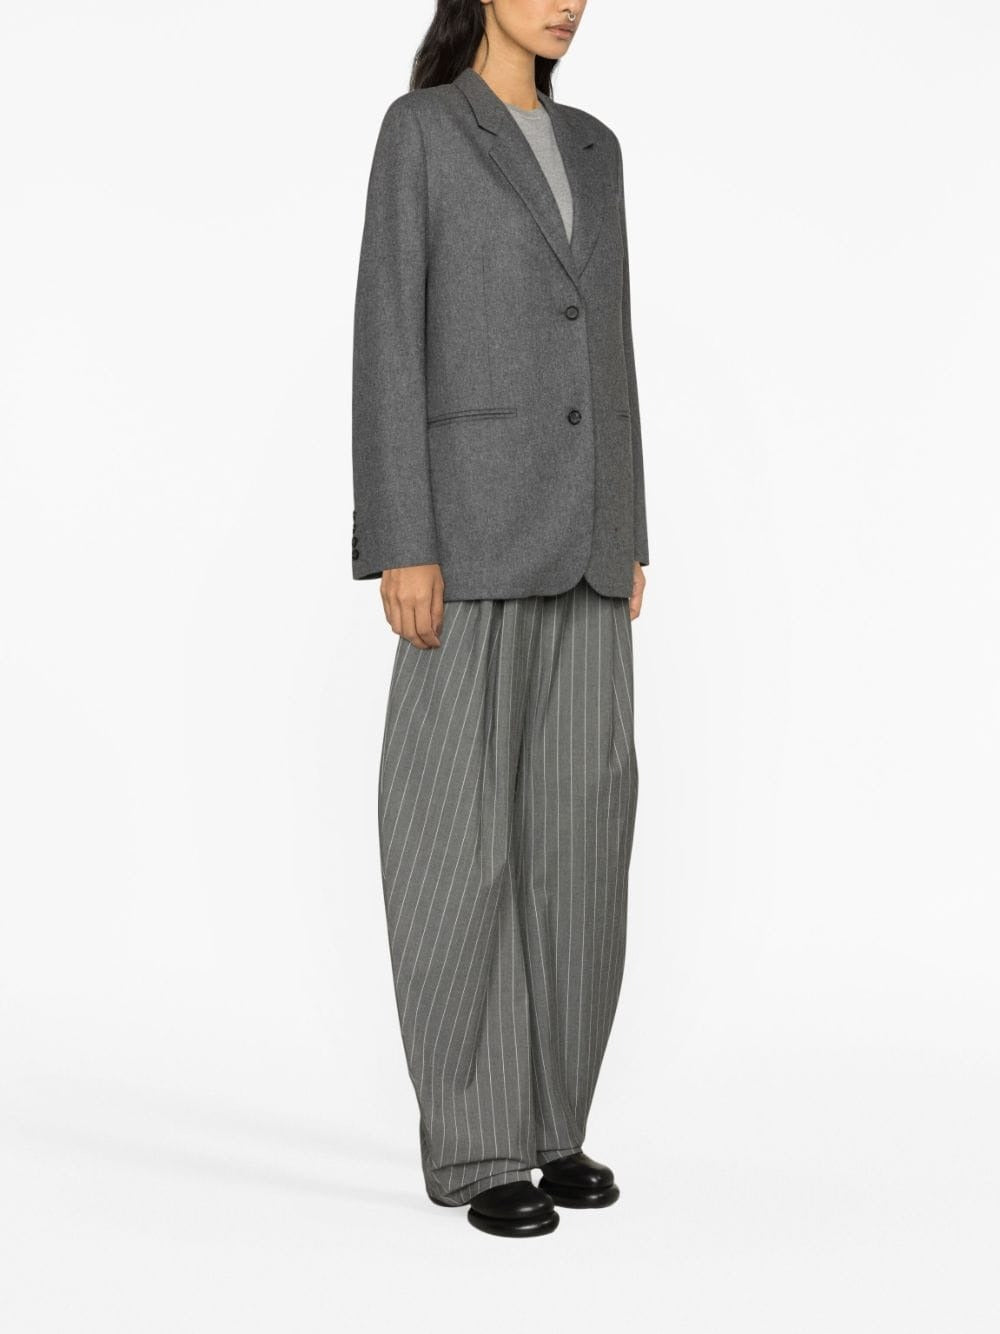 TOTEME-Tailored Suit Jacket-234WRTWBL206FB0024 GREY MELANGE 074